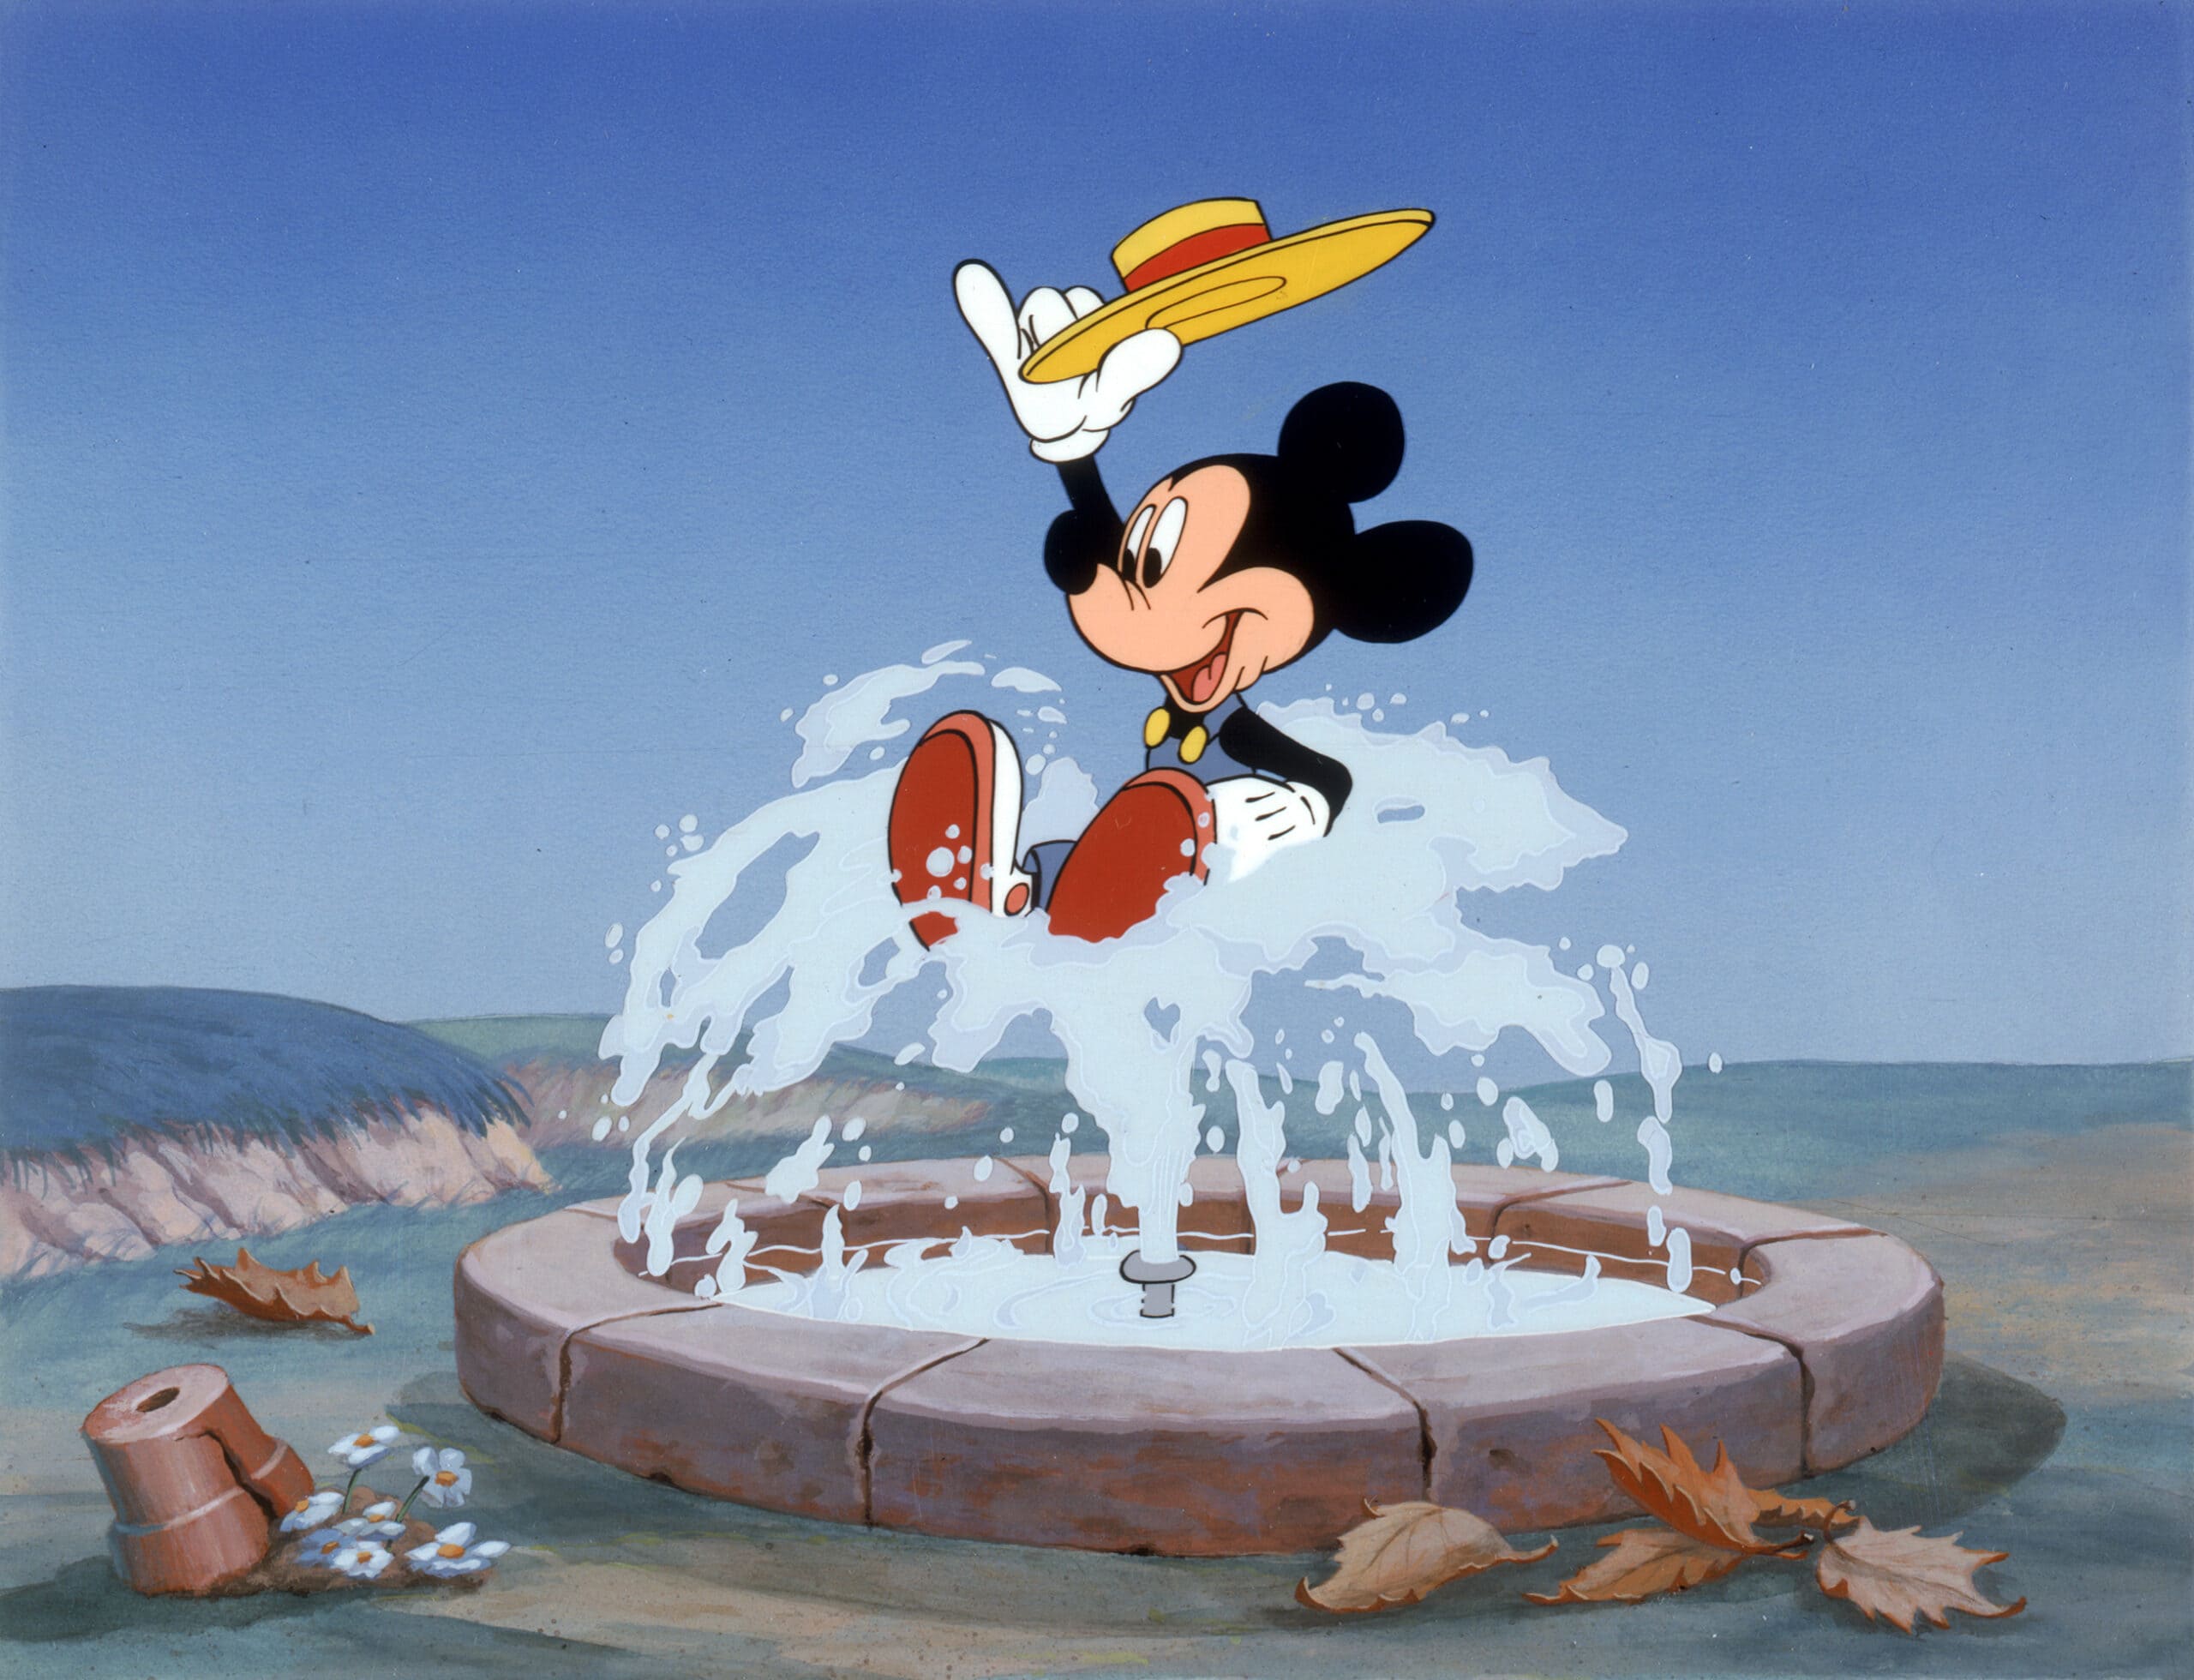 Mickey & Minnie 10 Classic Shorts Volume 1